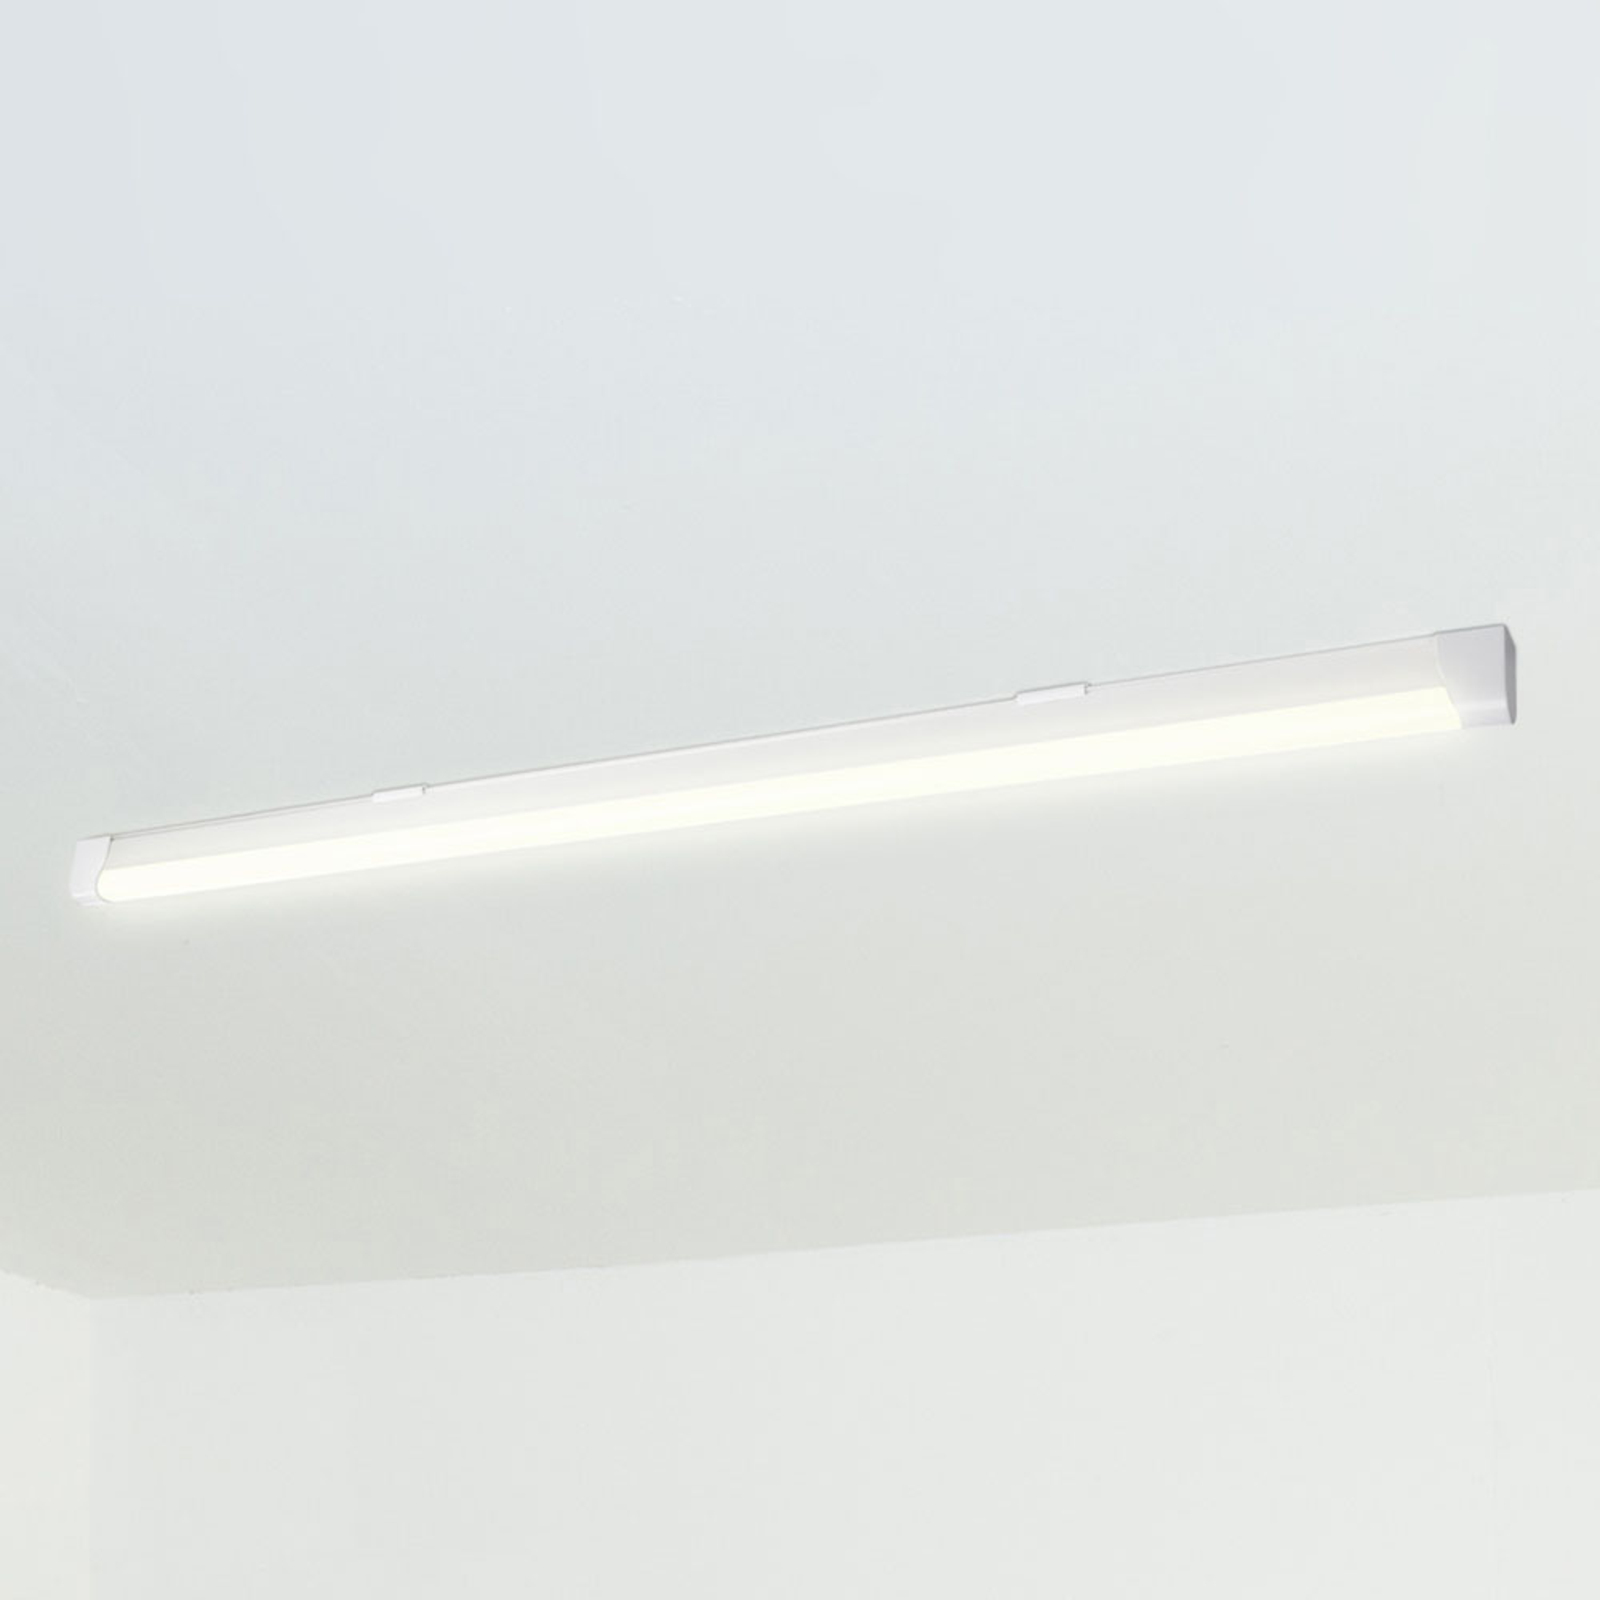 Müller Licht Ecoline 120 plafonnier LED